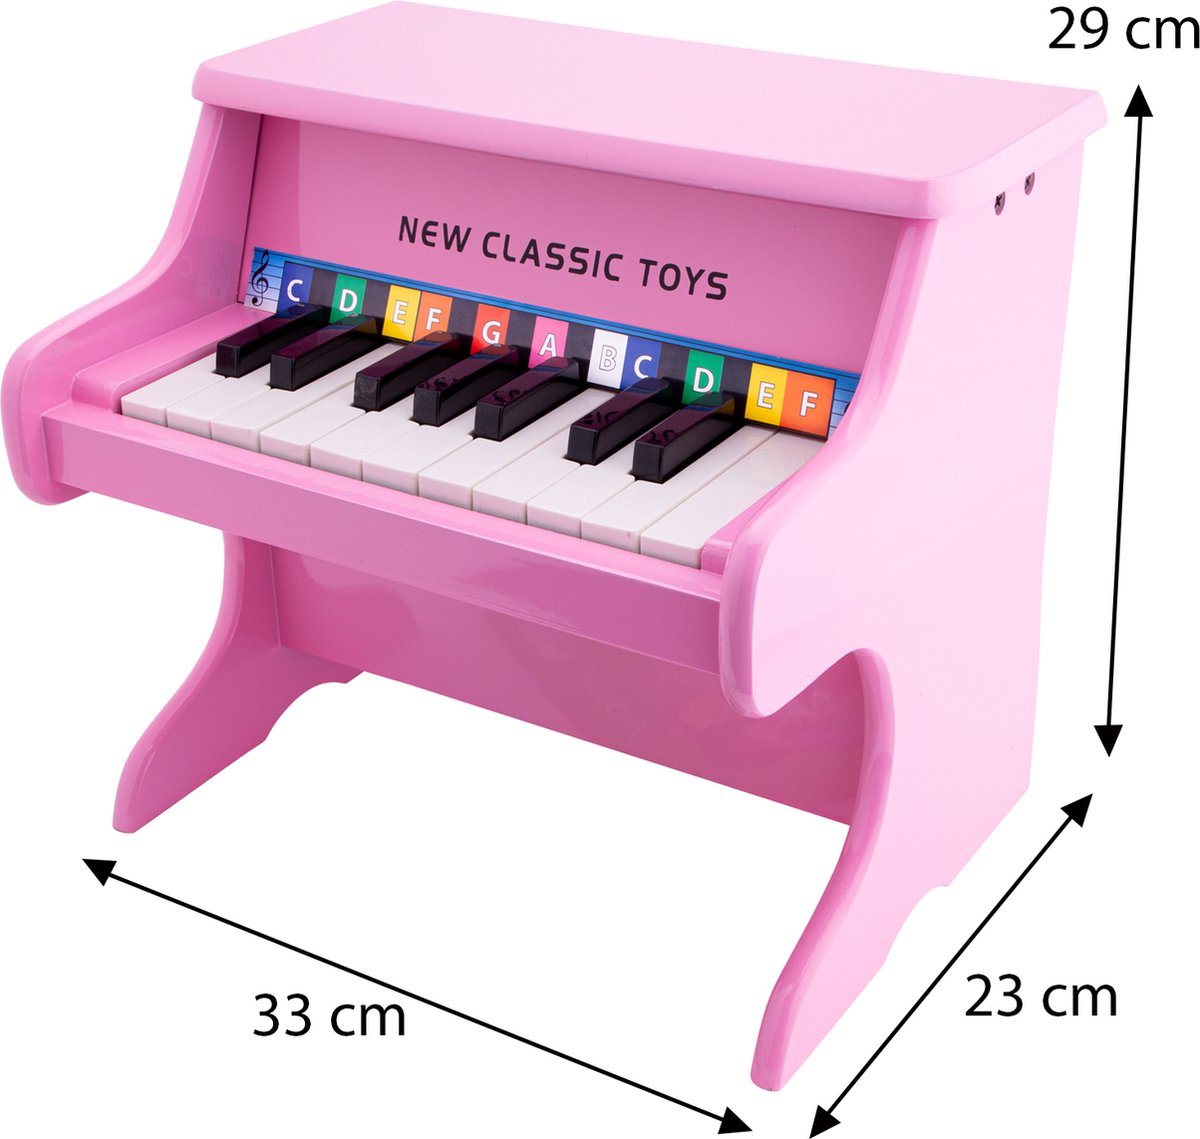 New Classic Toys Houten Speelgoed Piano - Roze - Inclusief Muziekboekje |  bol.com